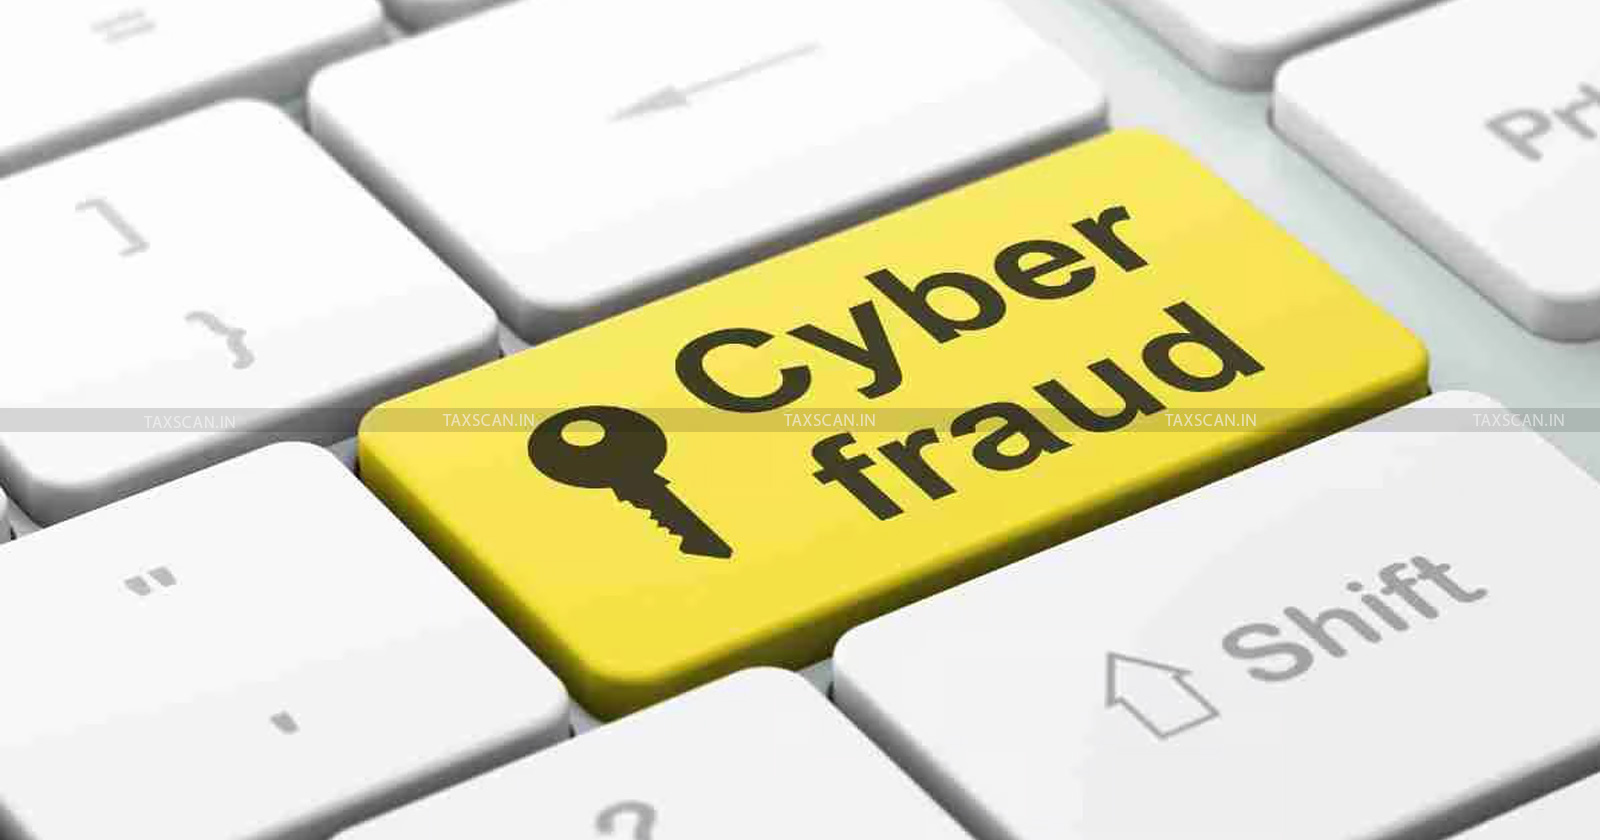 Cyber Fraud - Pune cyber fraud - Bank loan fraud - cyber fraud case - taxscan